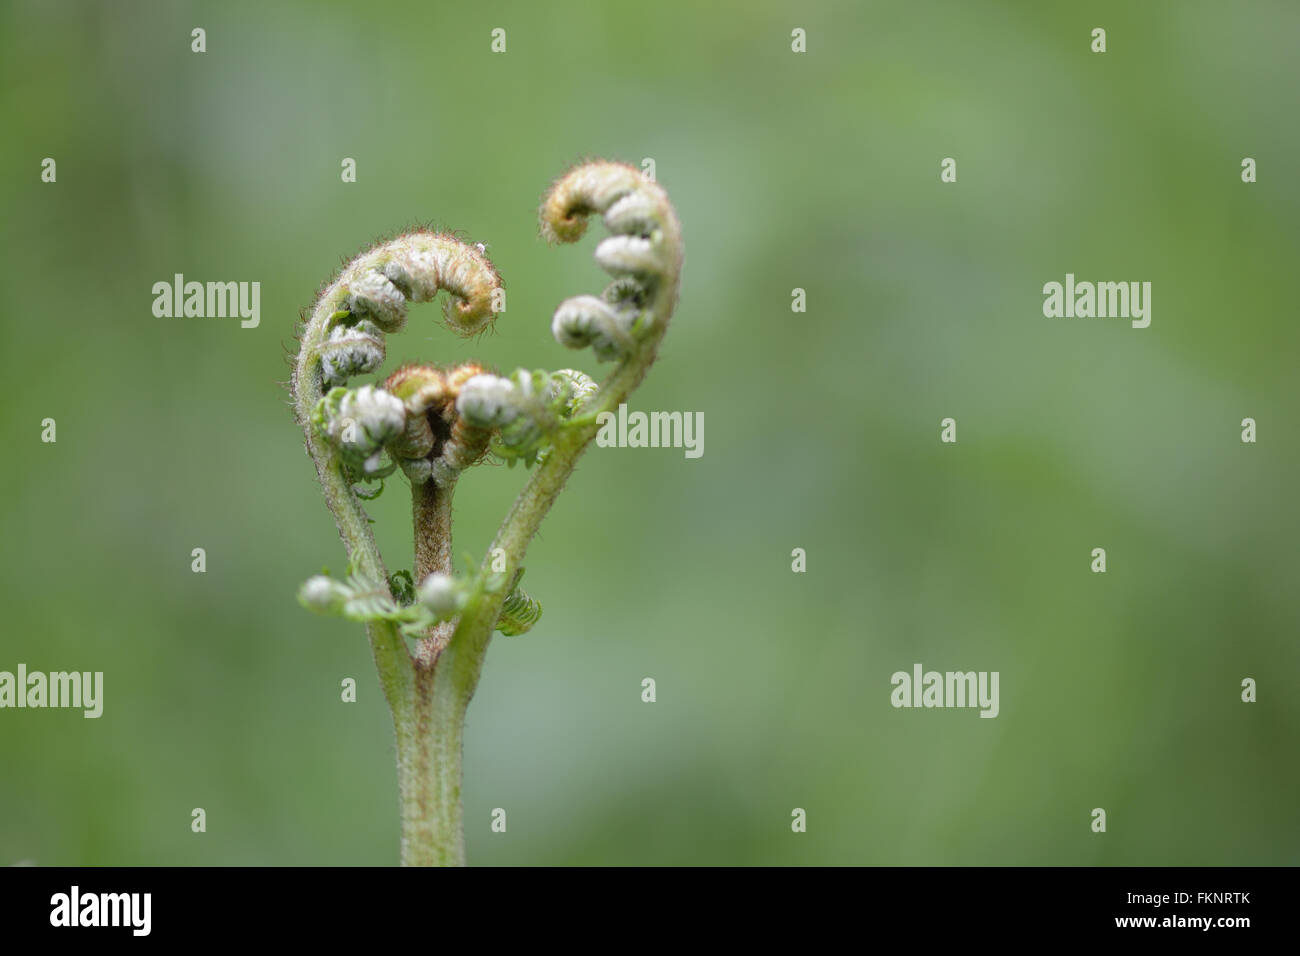 Bracken (Pteridium aquilinum). Nuovo fronde dispiegarsi come molla prende in mano, a felce in famiglia Dennstaedtiaceae Foto Stock